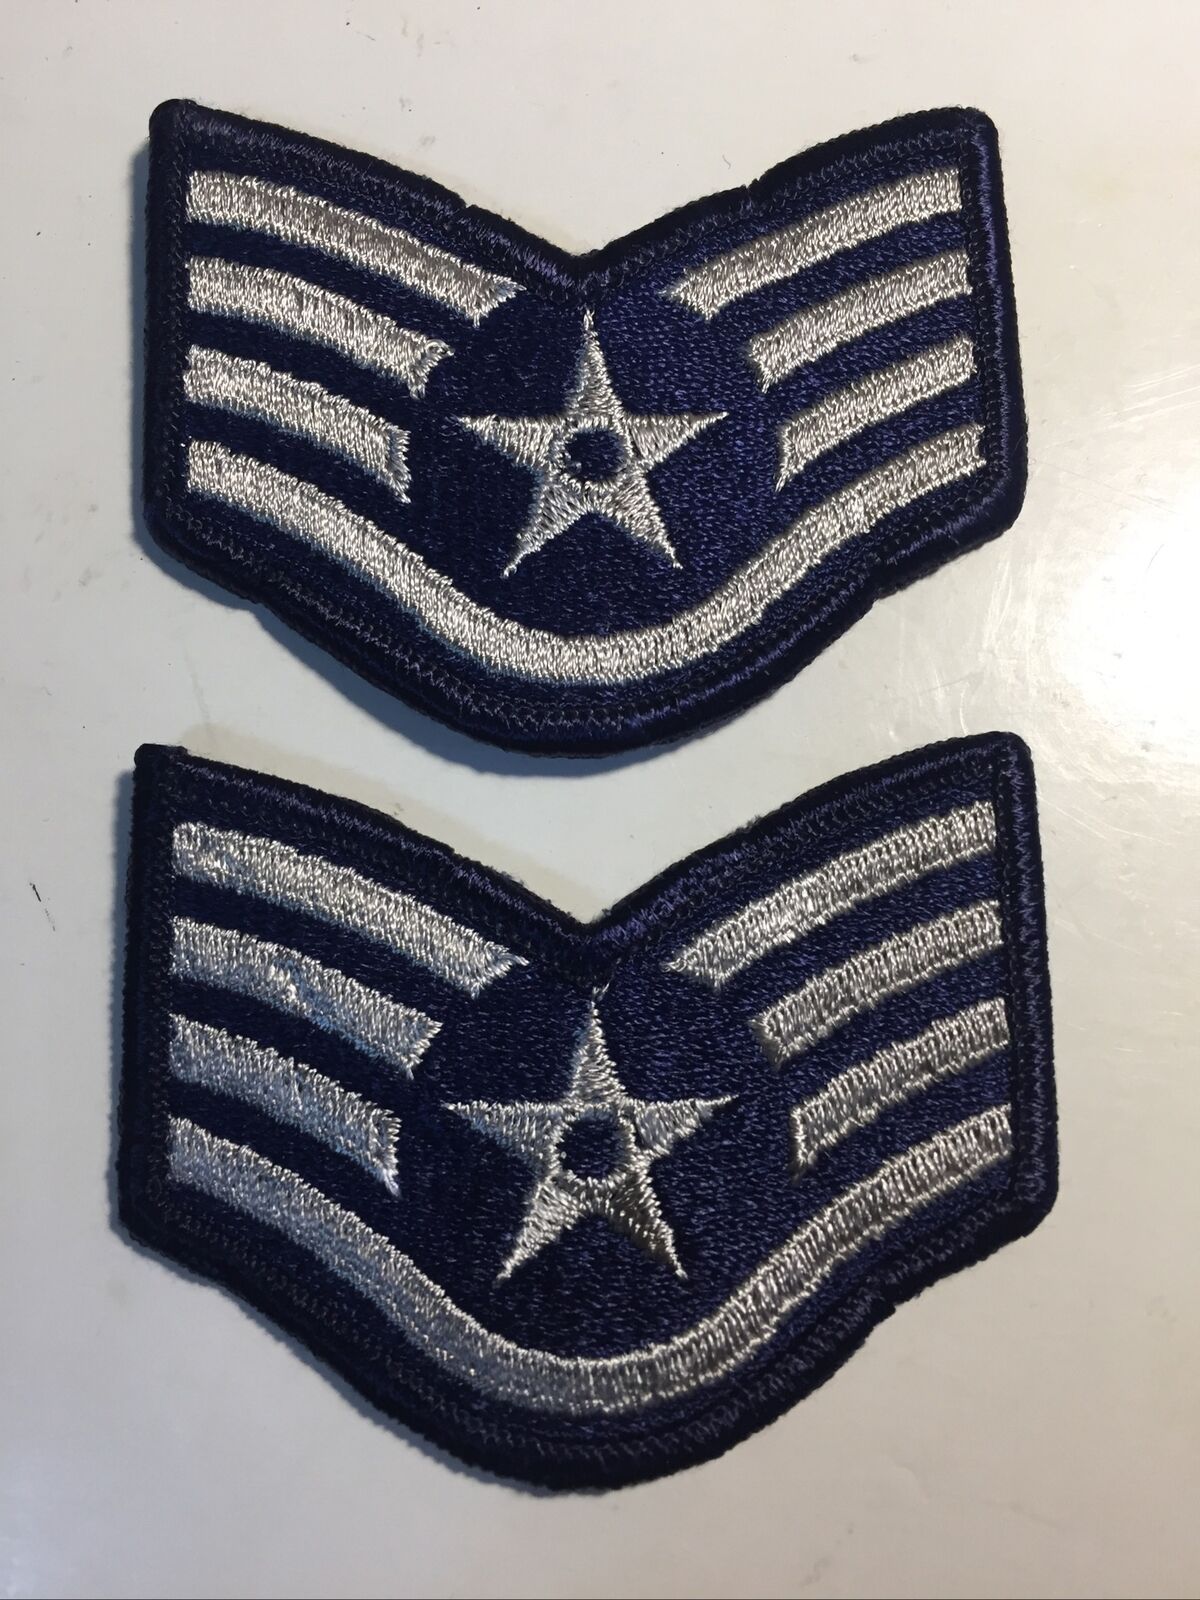 USAF SSgt (E-5) Blues Chevron Stripes Pair Air Force Patches 3”